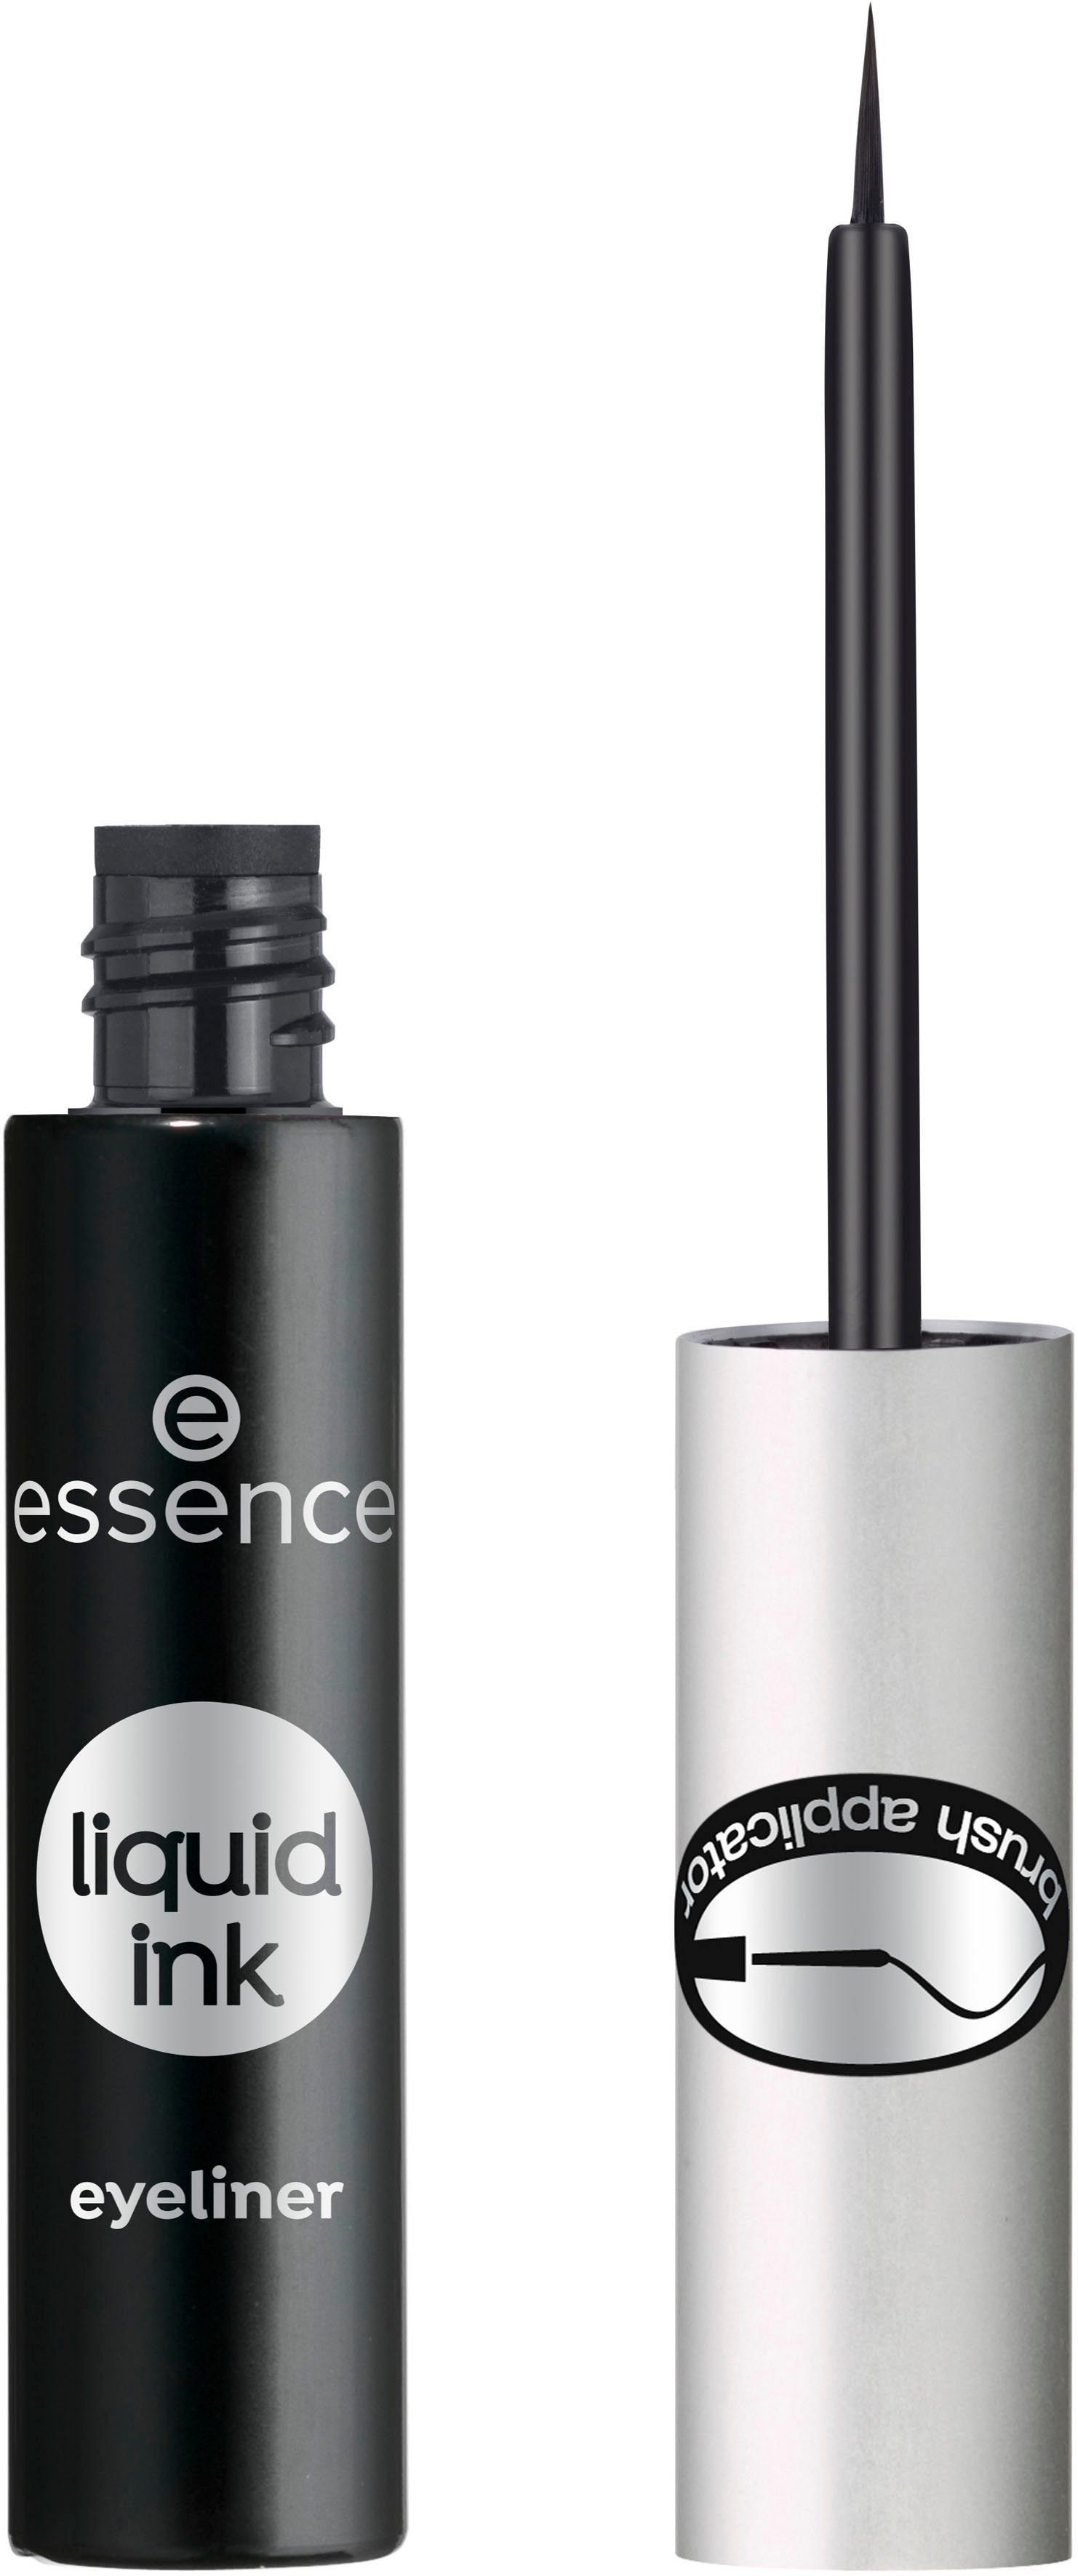 Essence Eyeliner liquid ink eyeliner, 3-tlg